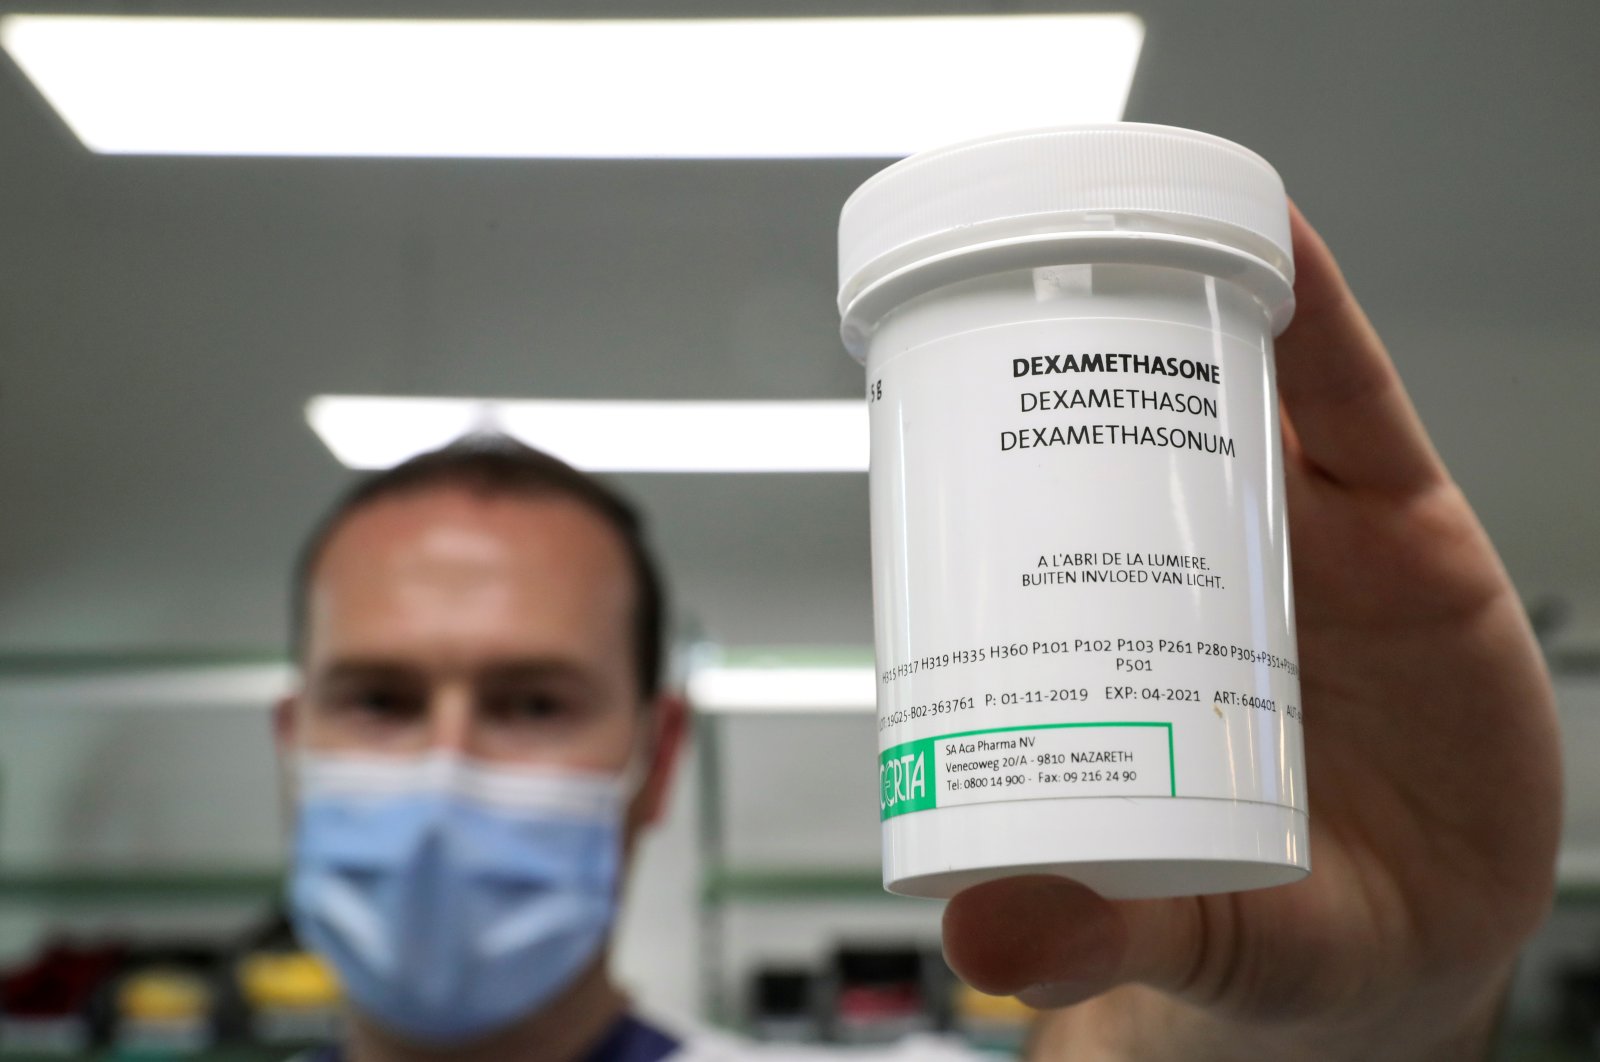 A pharmacist displays a box of Dexamethasone at the Erasme Hospital amid the coronavirus outbreak, in Brussels, Belgium, June 16, 2020. (Reuters Photo)